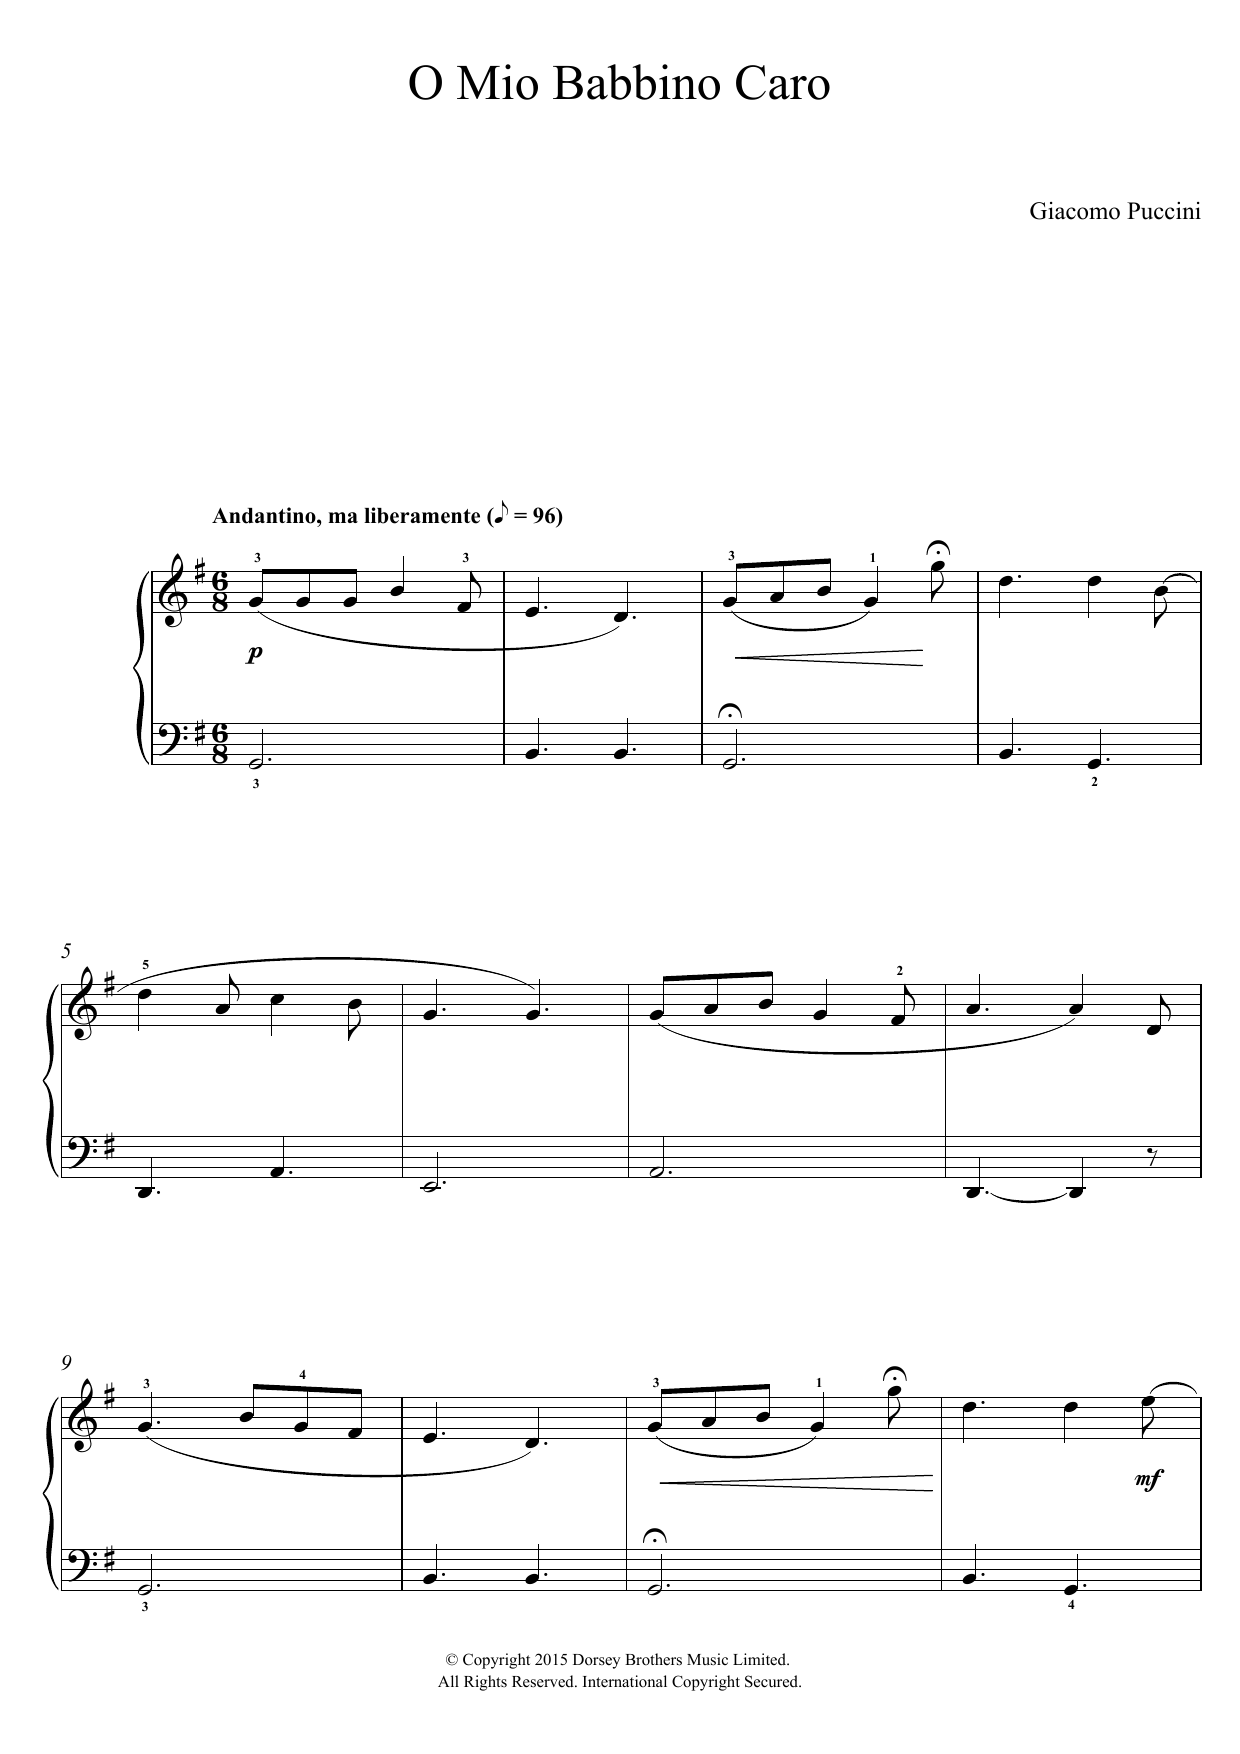 Giacomo Puccini O Mio Babbino Caro (from Gianni Schicchi) Sheet Music Notes & Chords for Beginner Piano - Download or Print PDF